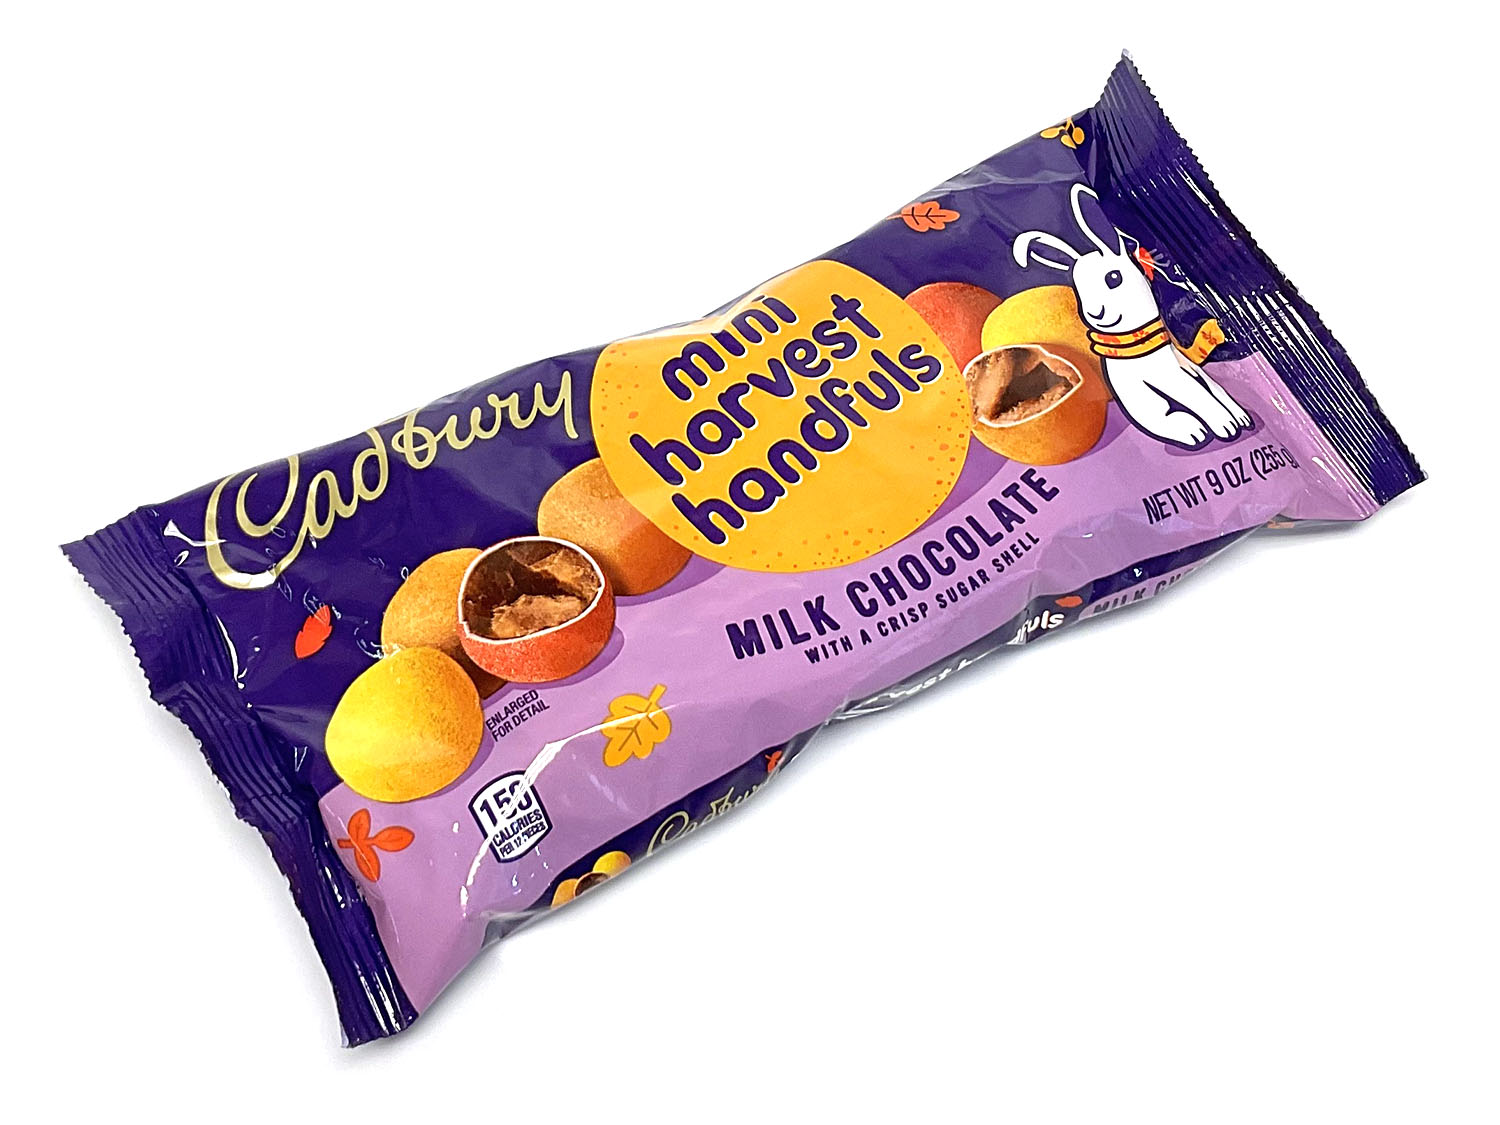 CADBURY CADBURY Mini Harvest Handfuls Milk Chocolate Candy Bag, 9 oz 